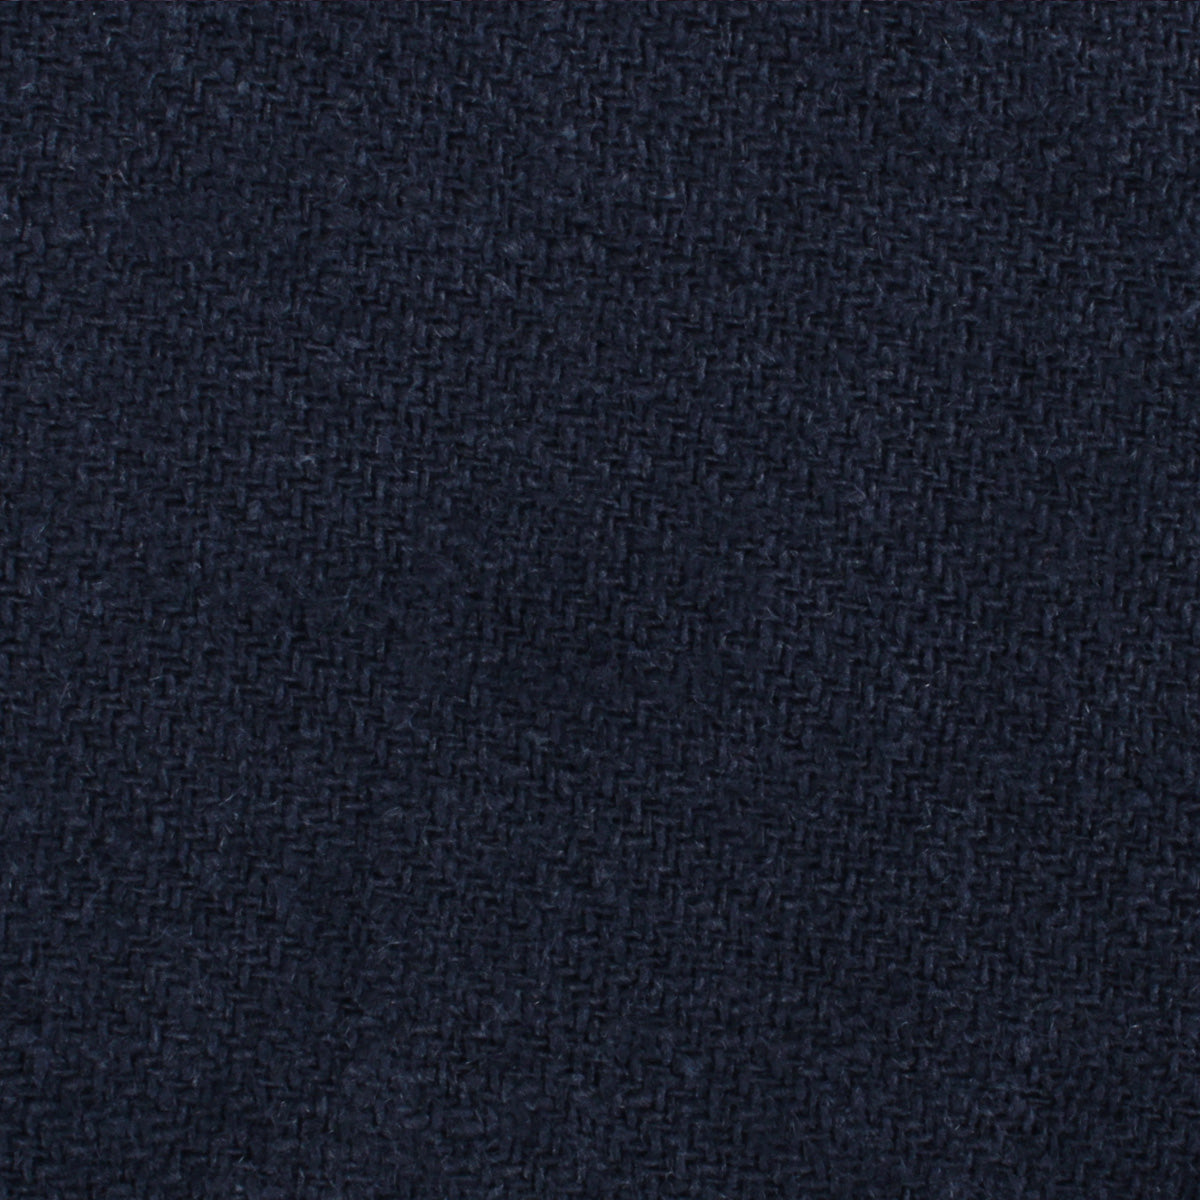 Midnight Blue-Black Linen Skinny Tie Fabric